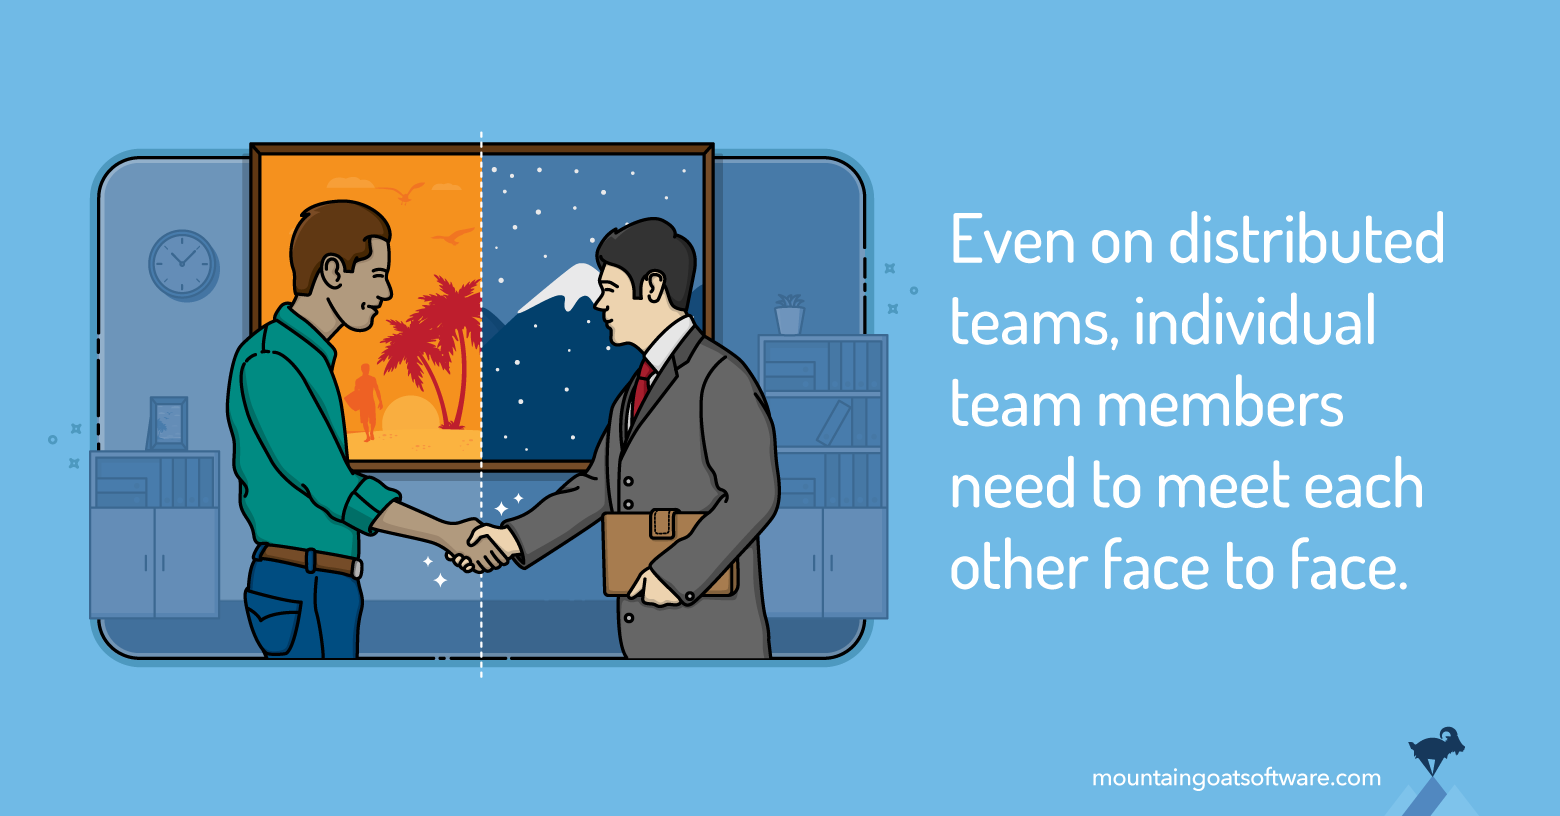 Build Trust Between Teams with Ambassadors